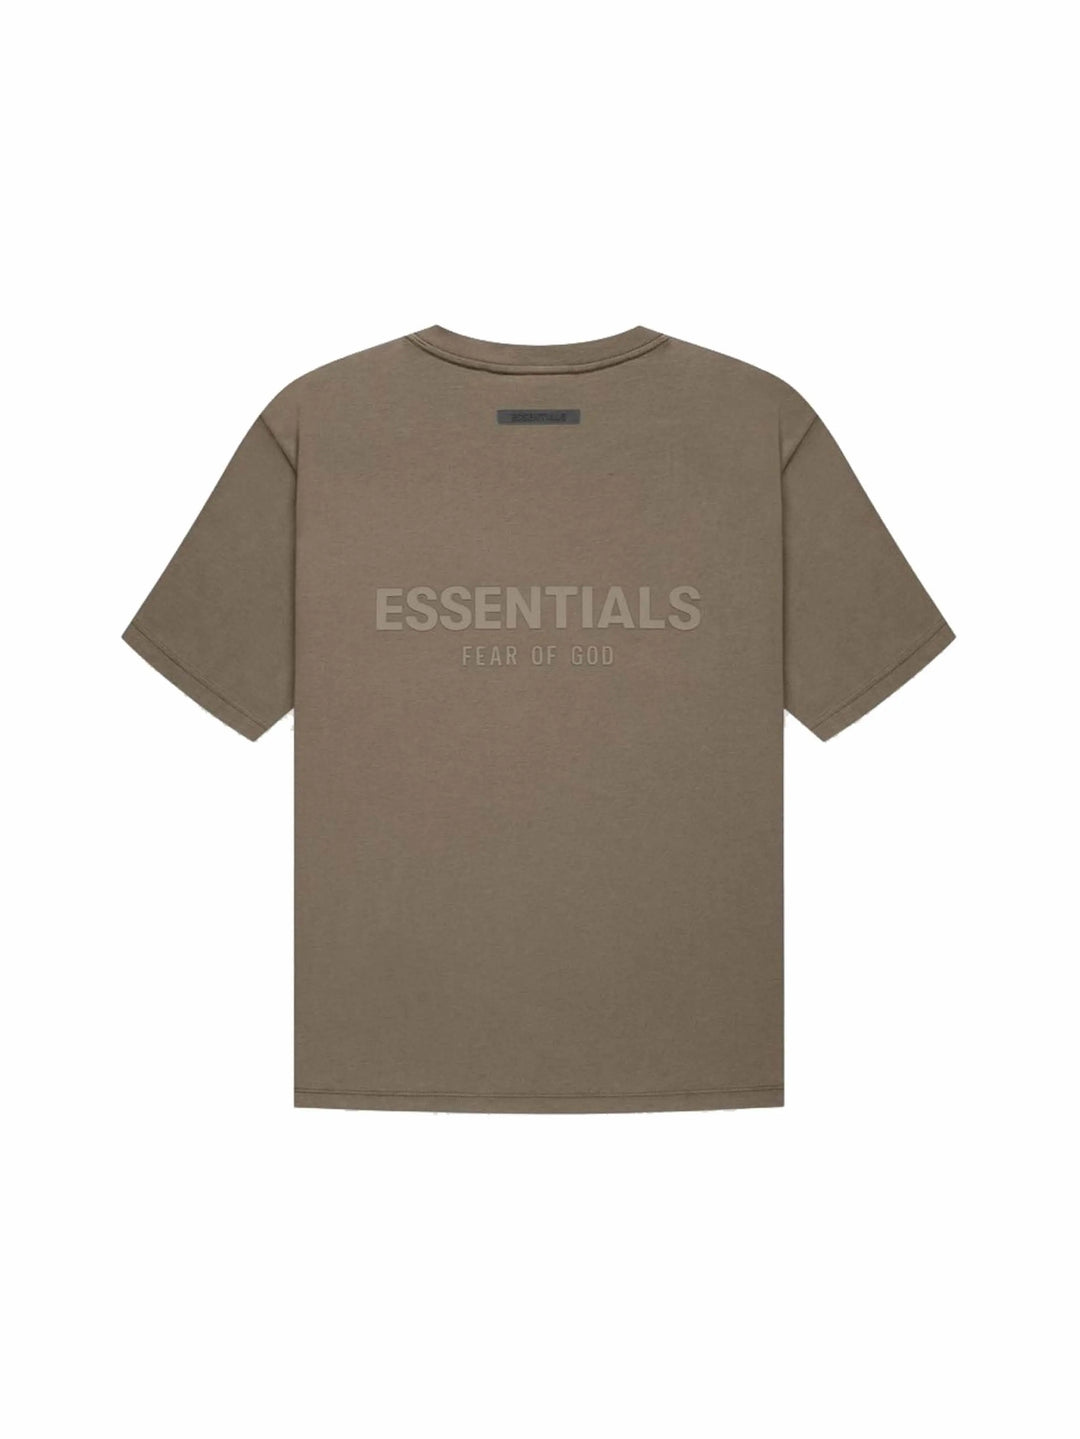 Fear of God Essentials T-shirt Harvest - Prior